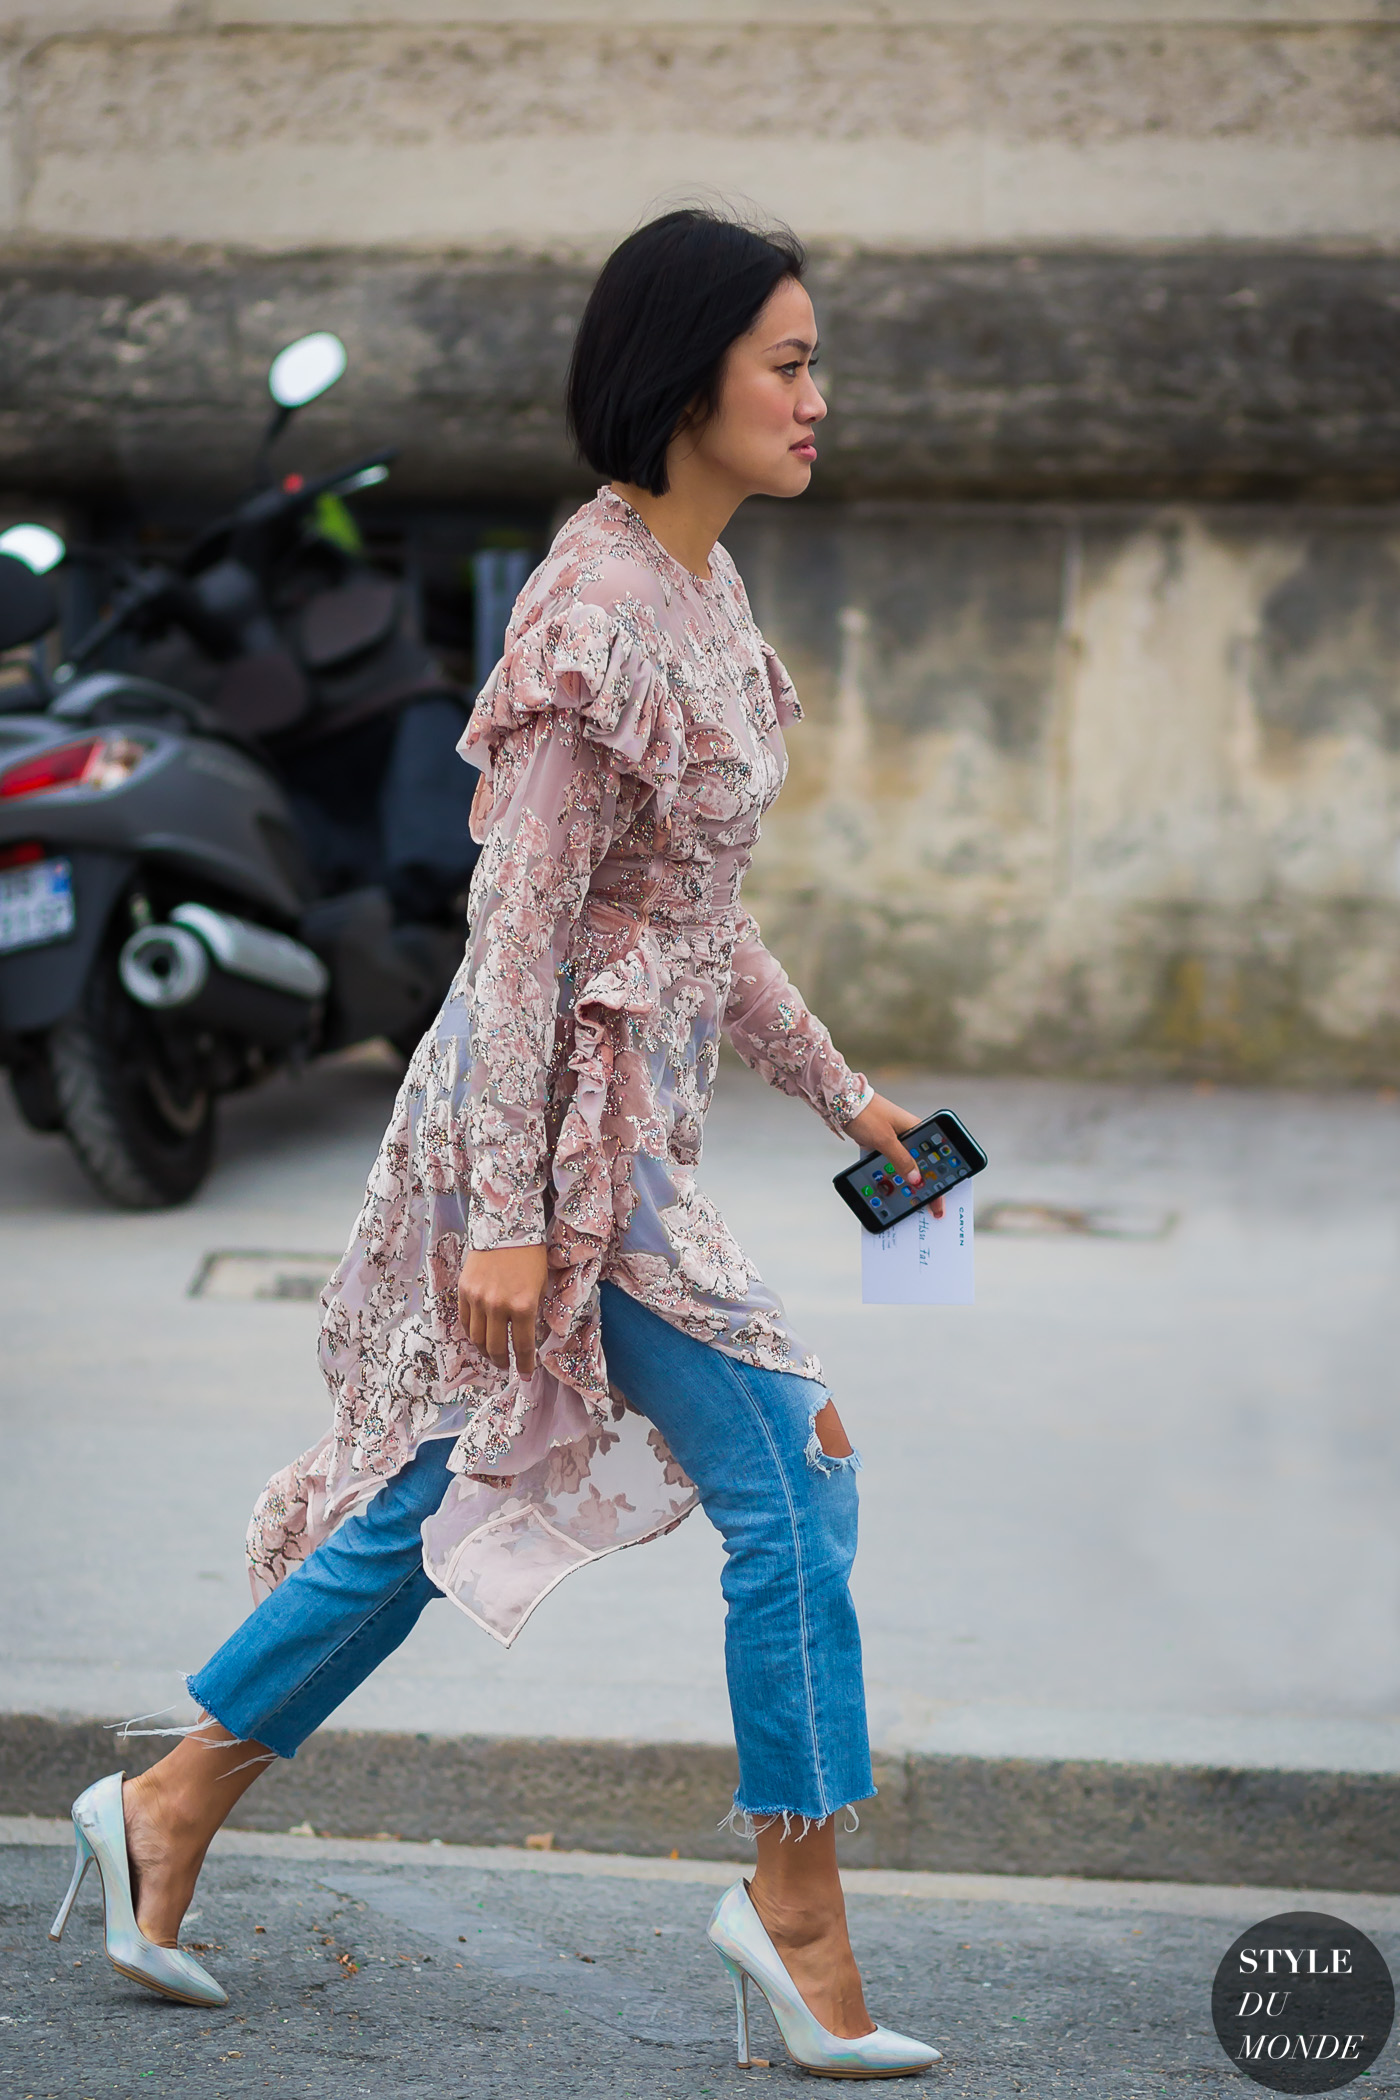 Tiffany Hsu by STYLEDUMONDE Street Style Fashion Photography